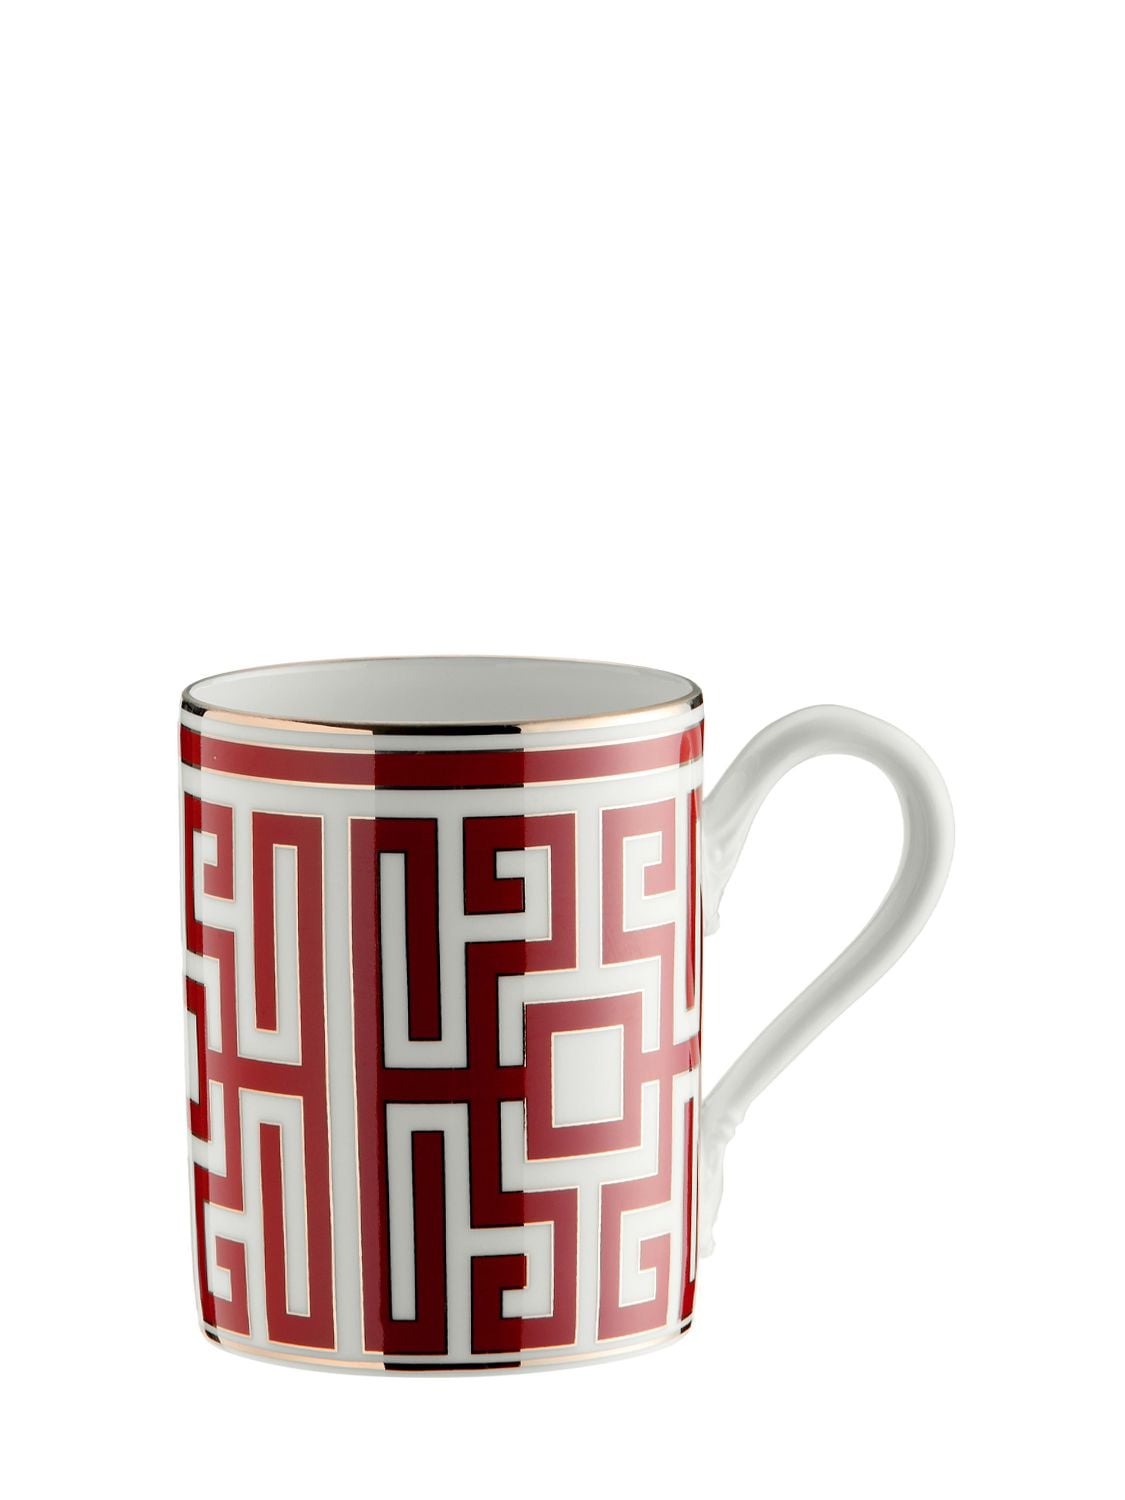 Ginori 1735 Labirinto Porcelain Mug In Red